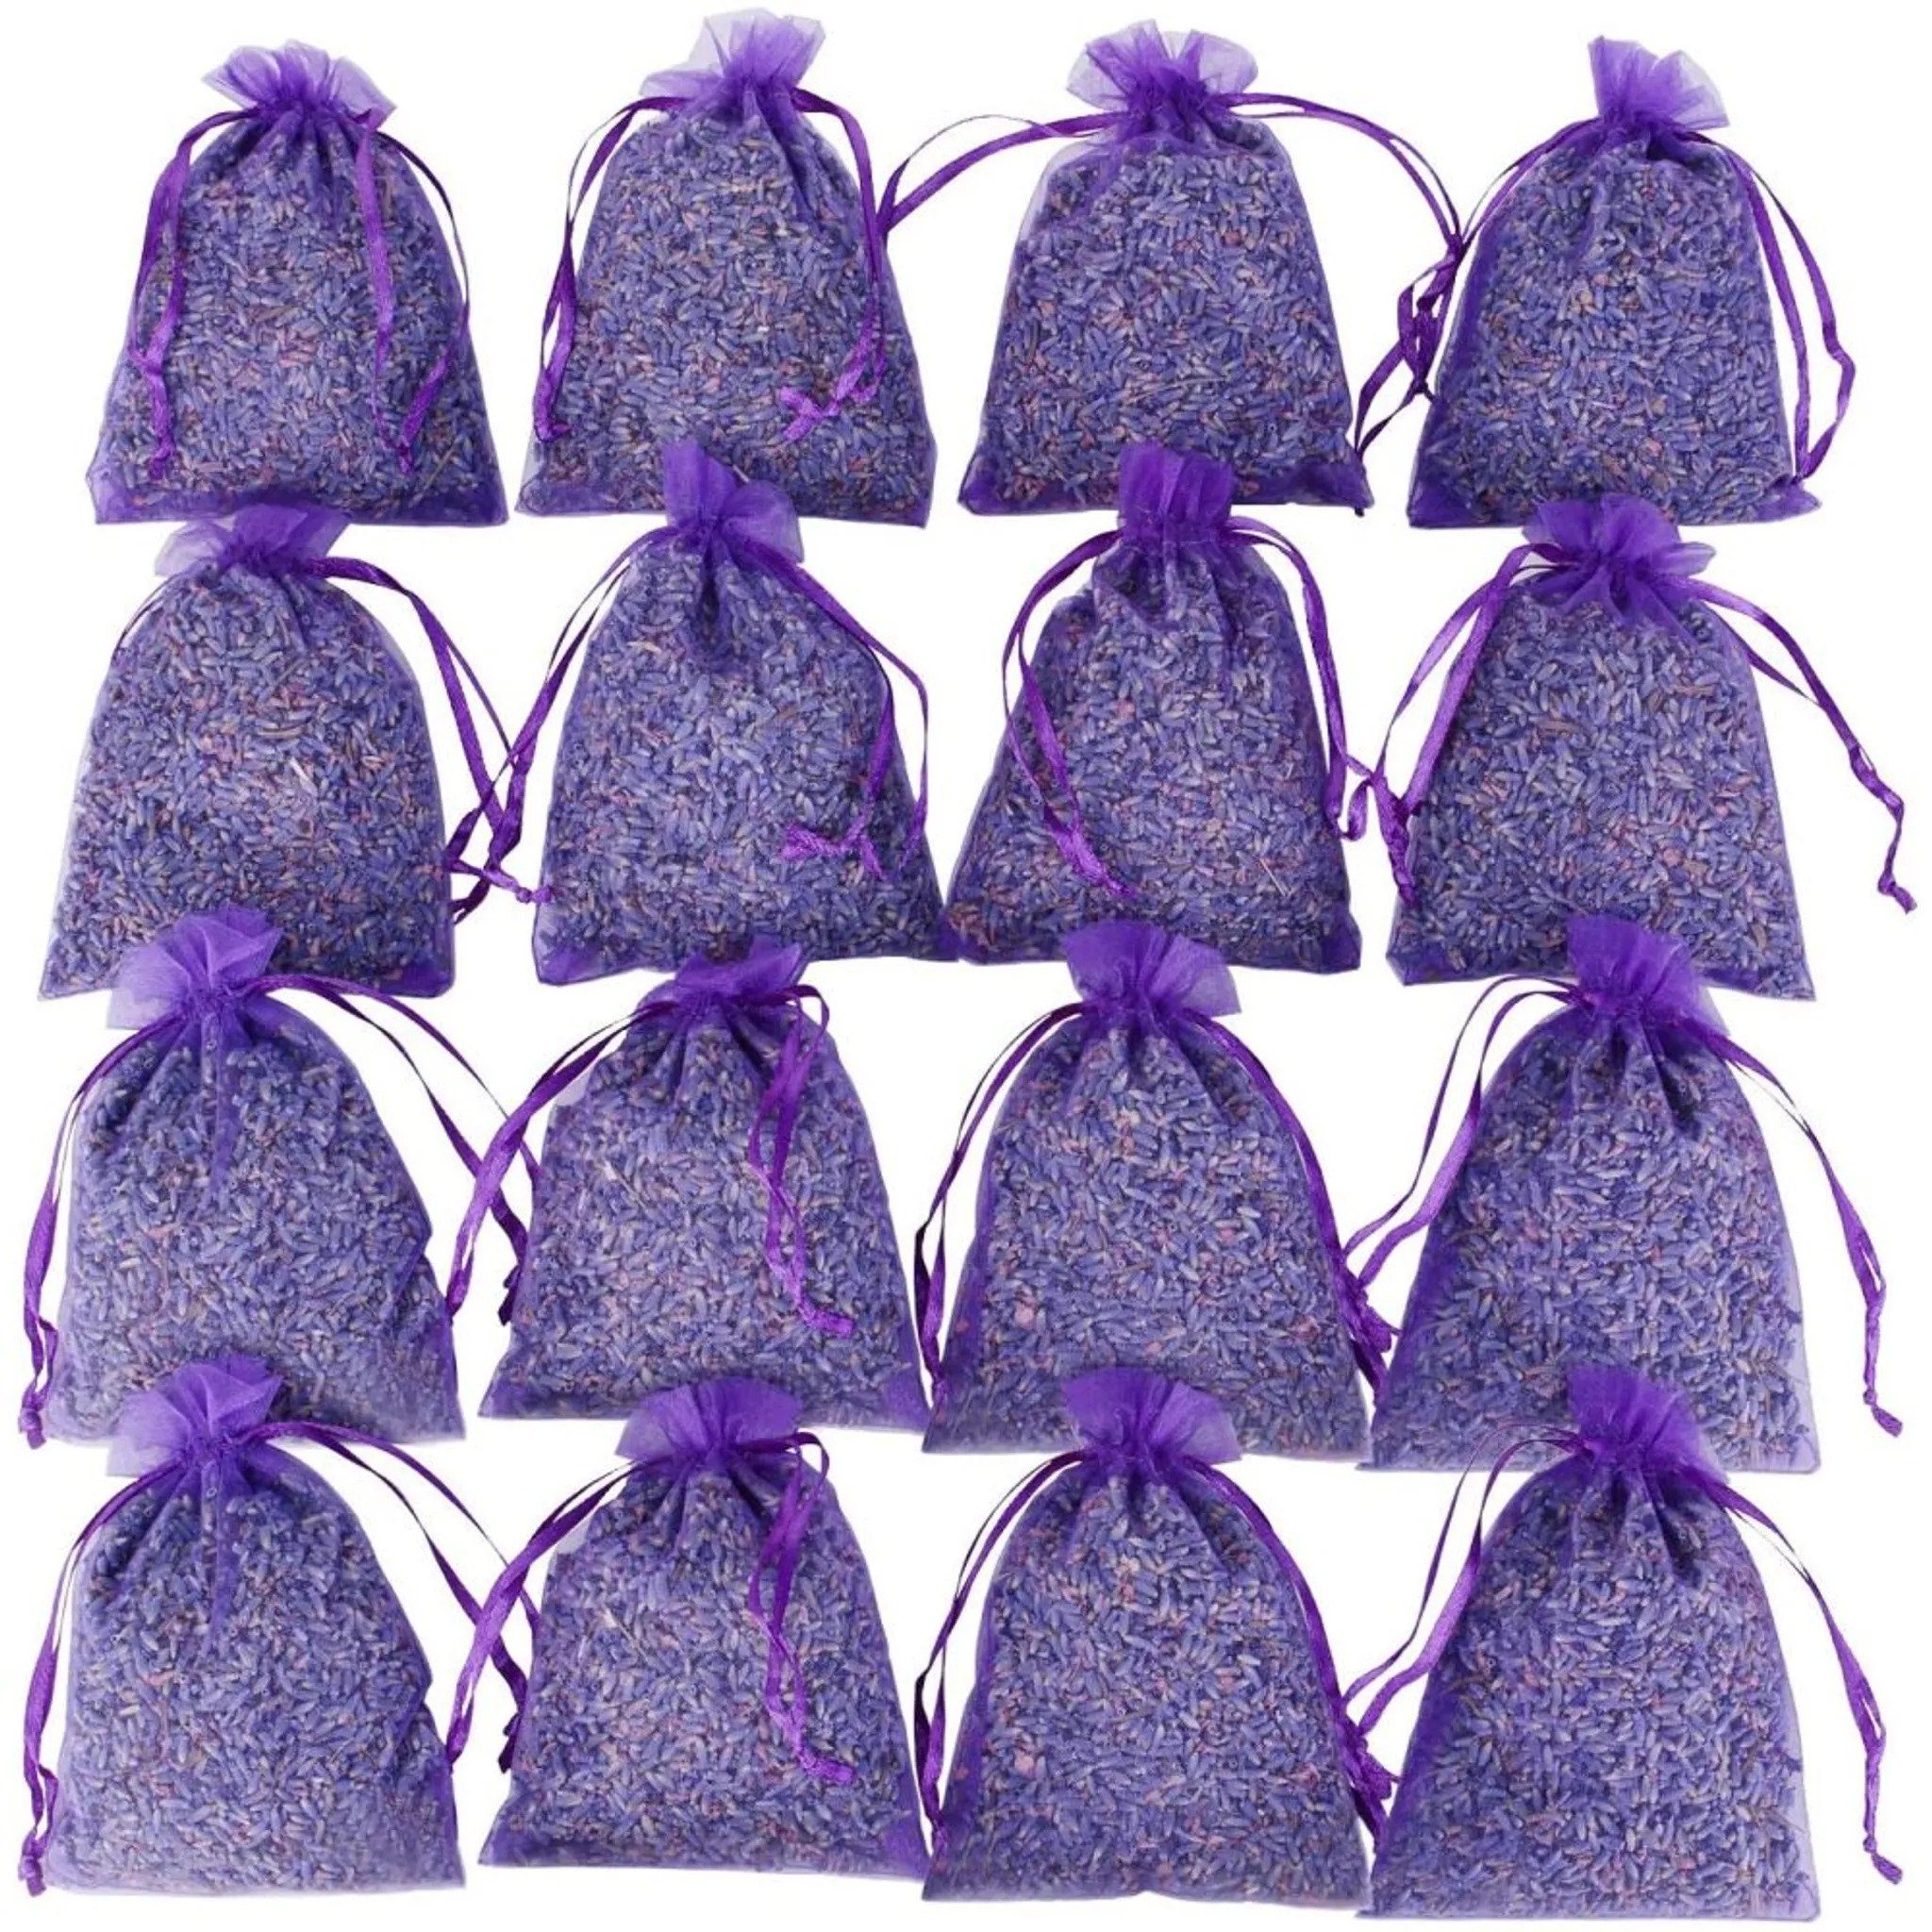 TUABUR 16 Duftsäckchen: Duftbeutel Duftsäckchen Lavendel Lavendel getrocknet